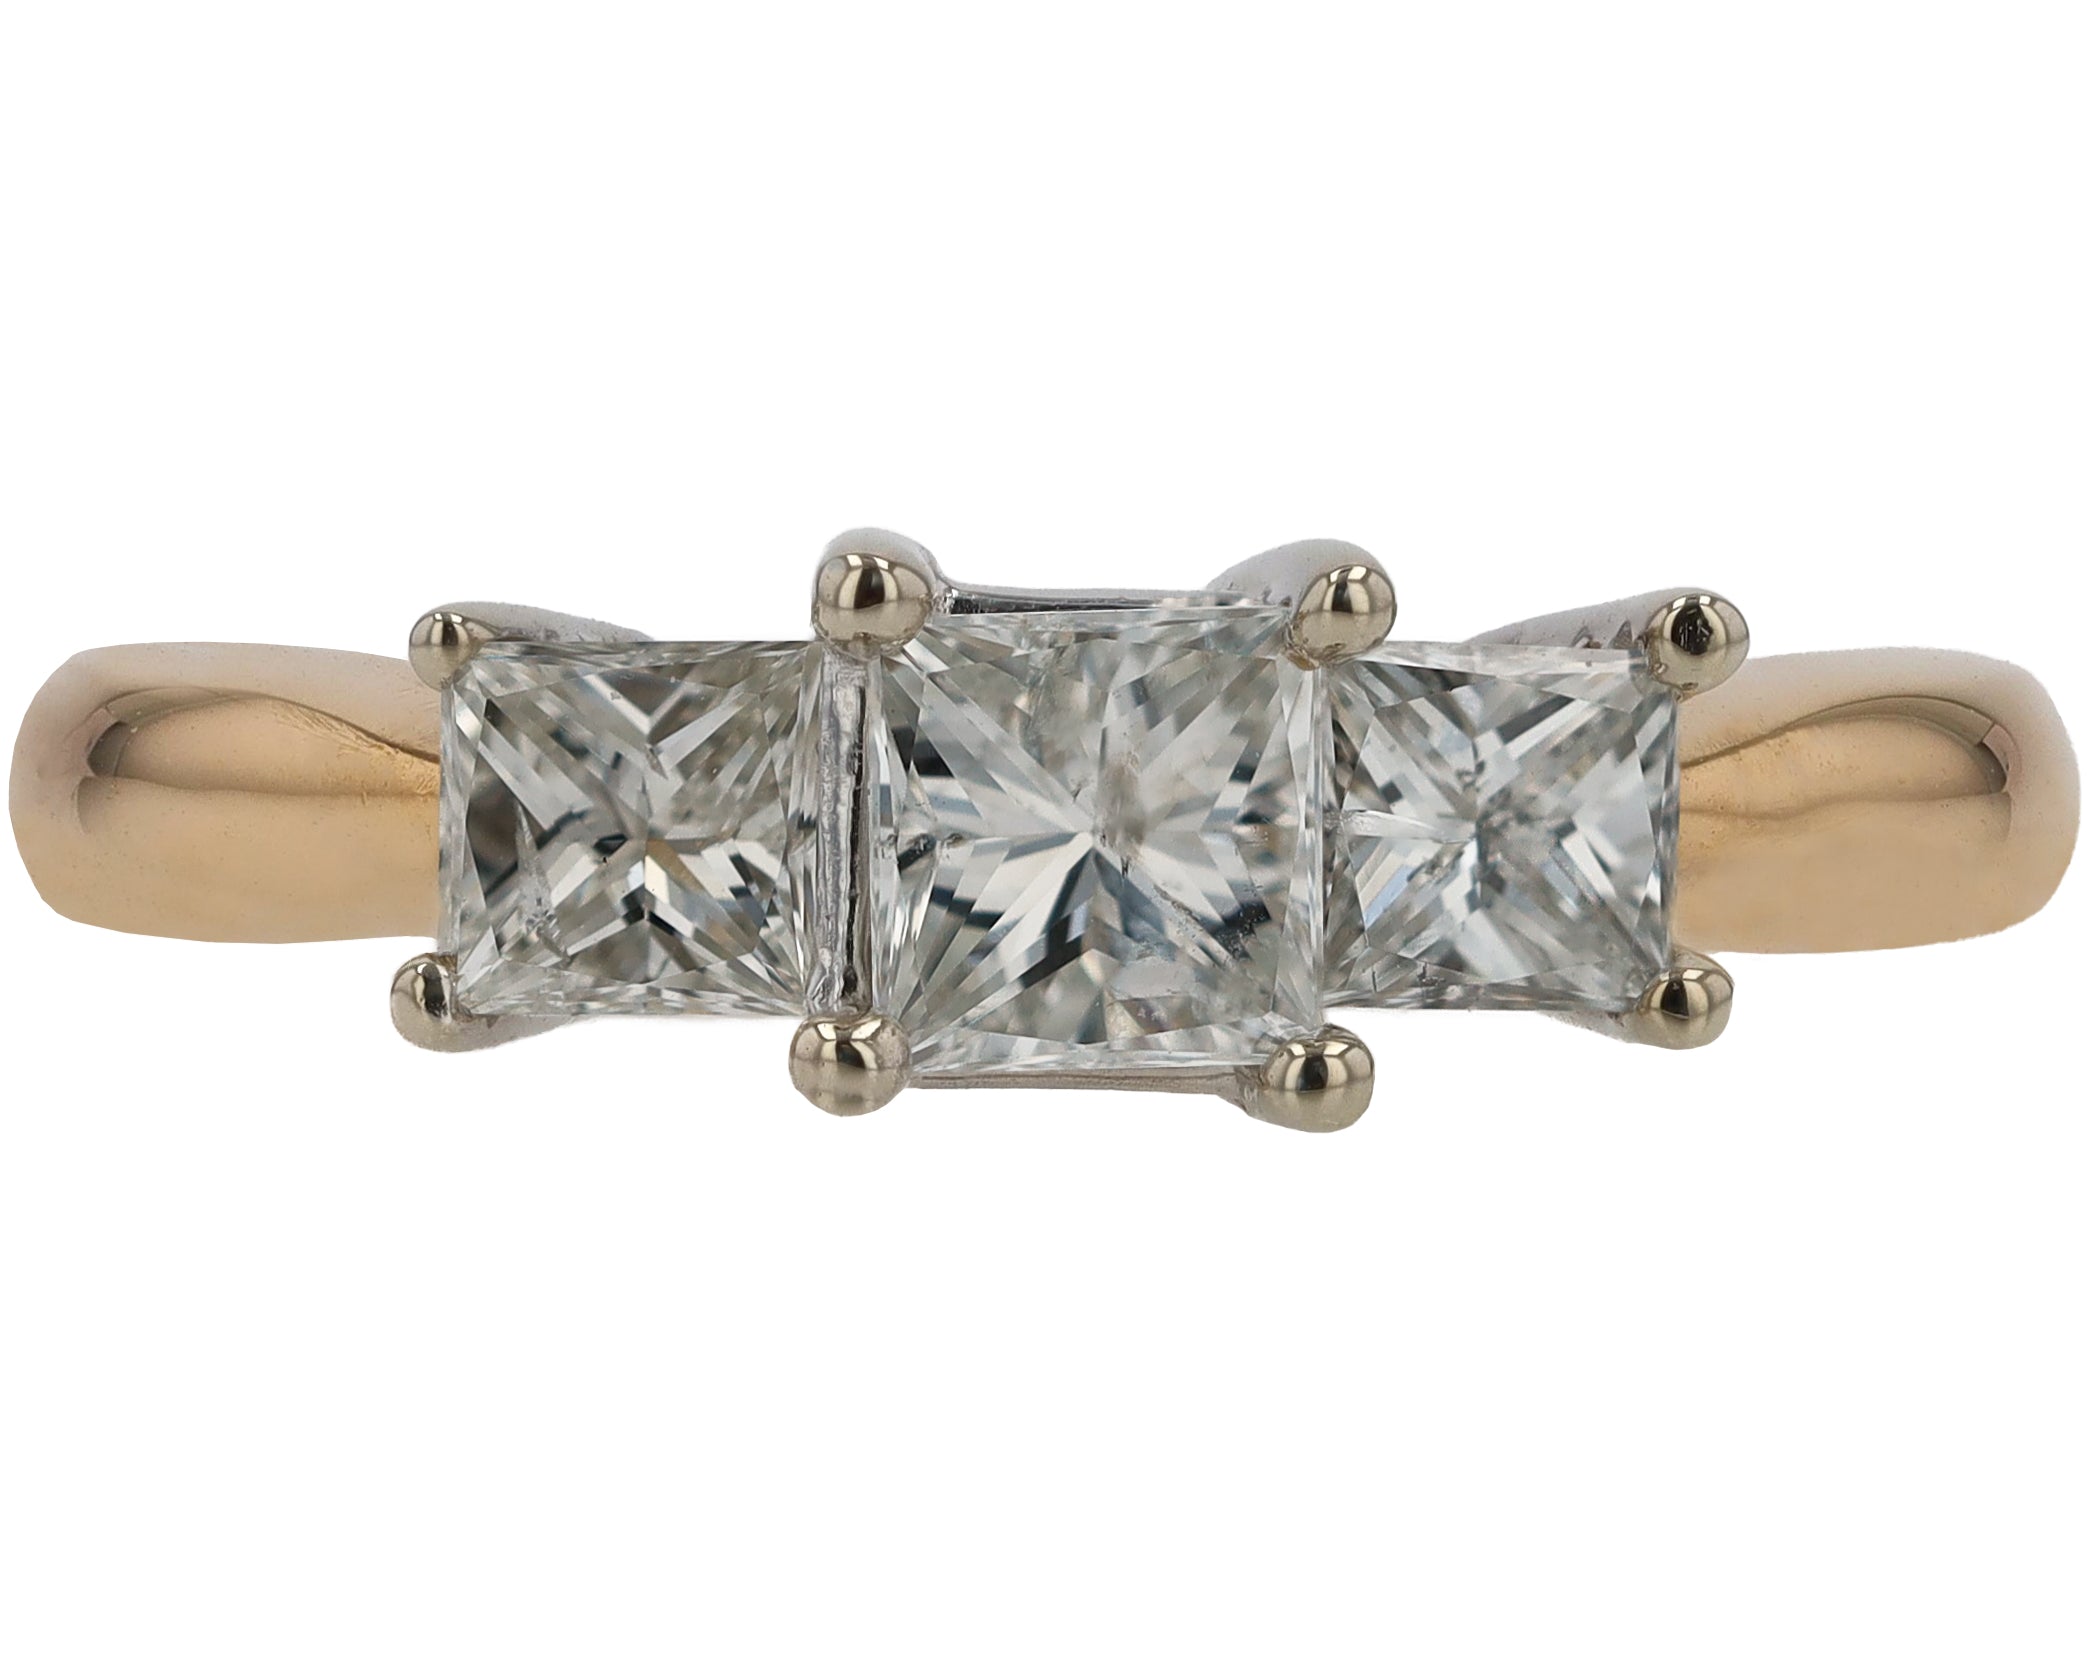 Vintage 3 Stone 1.10 Ctw Princess Cut Diamond Engagement Ring